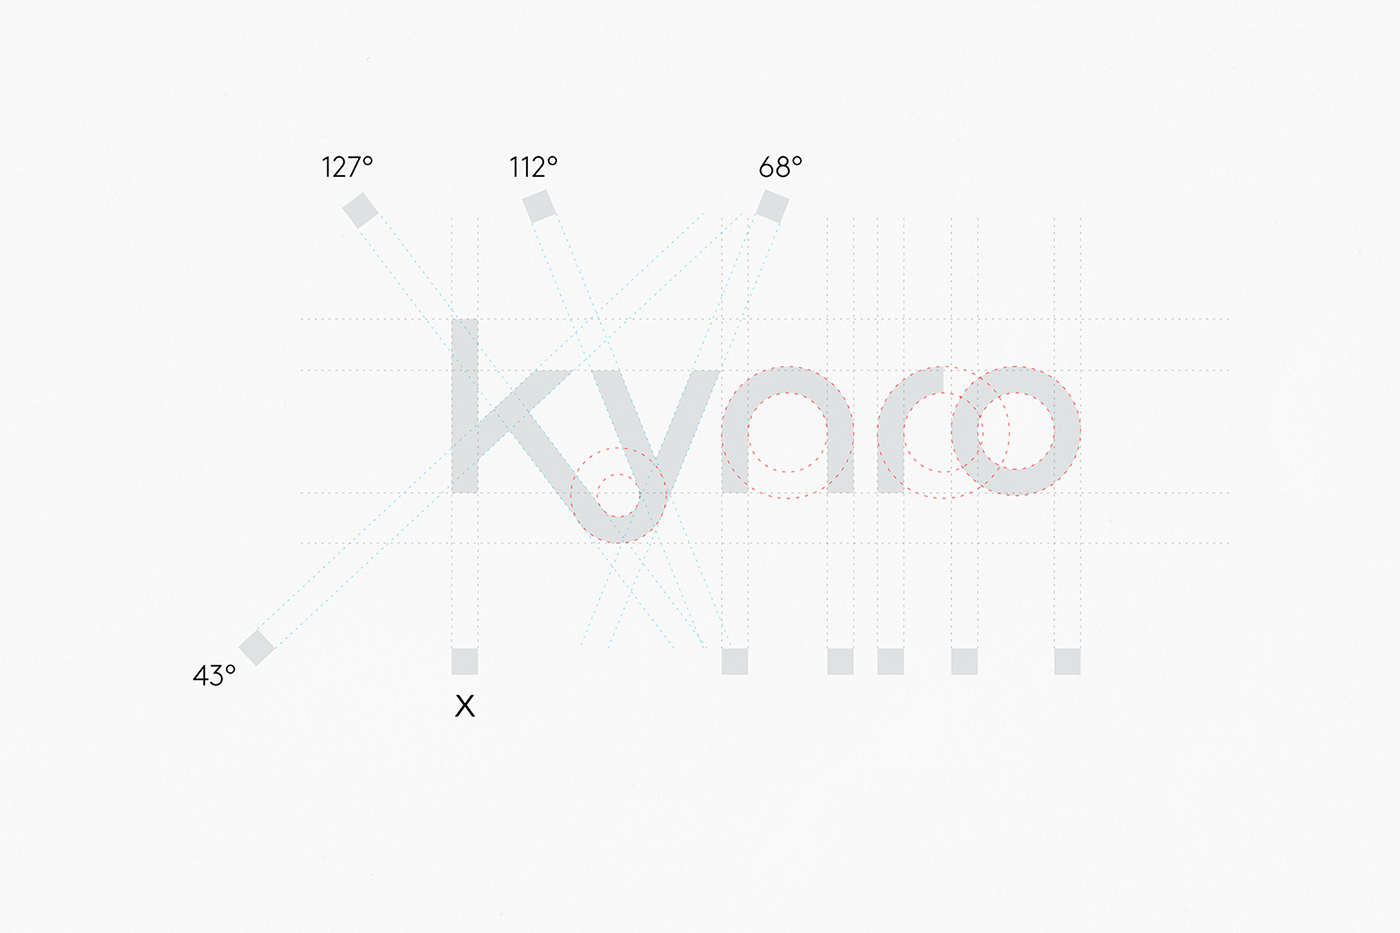 Logo Design Kynro Logotype logo Startup KY Typeface Custom graphic design  type